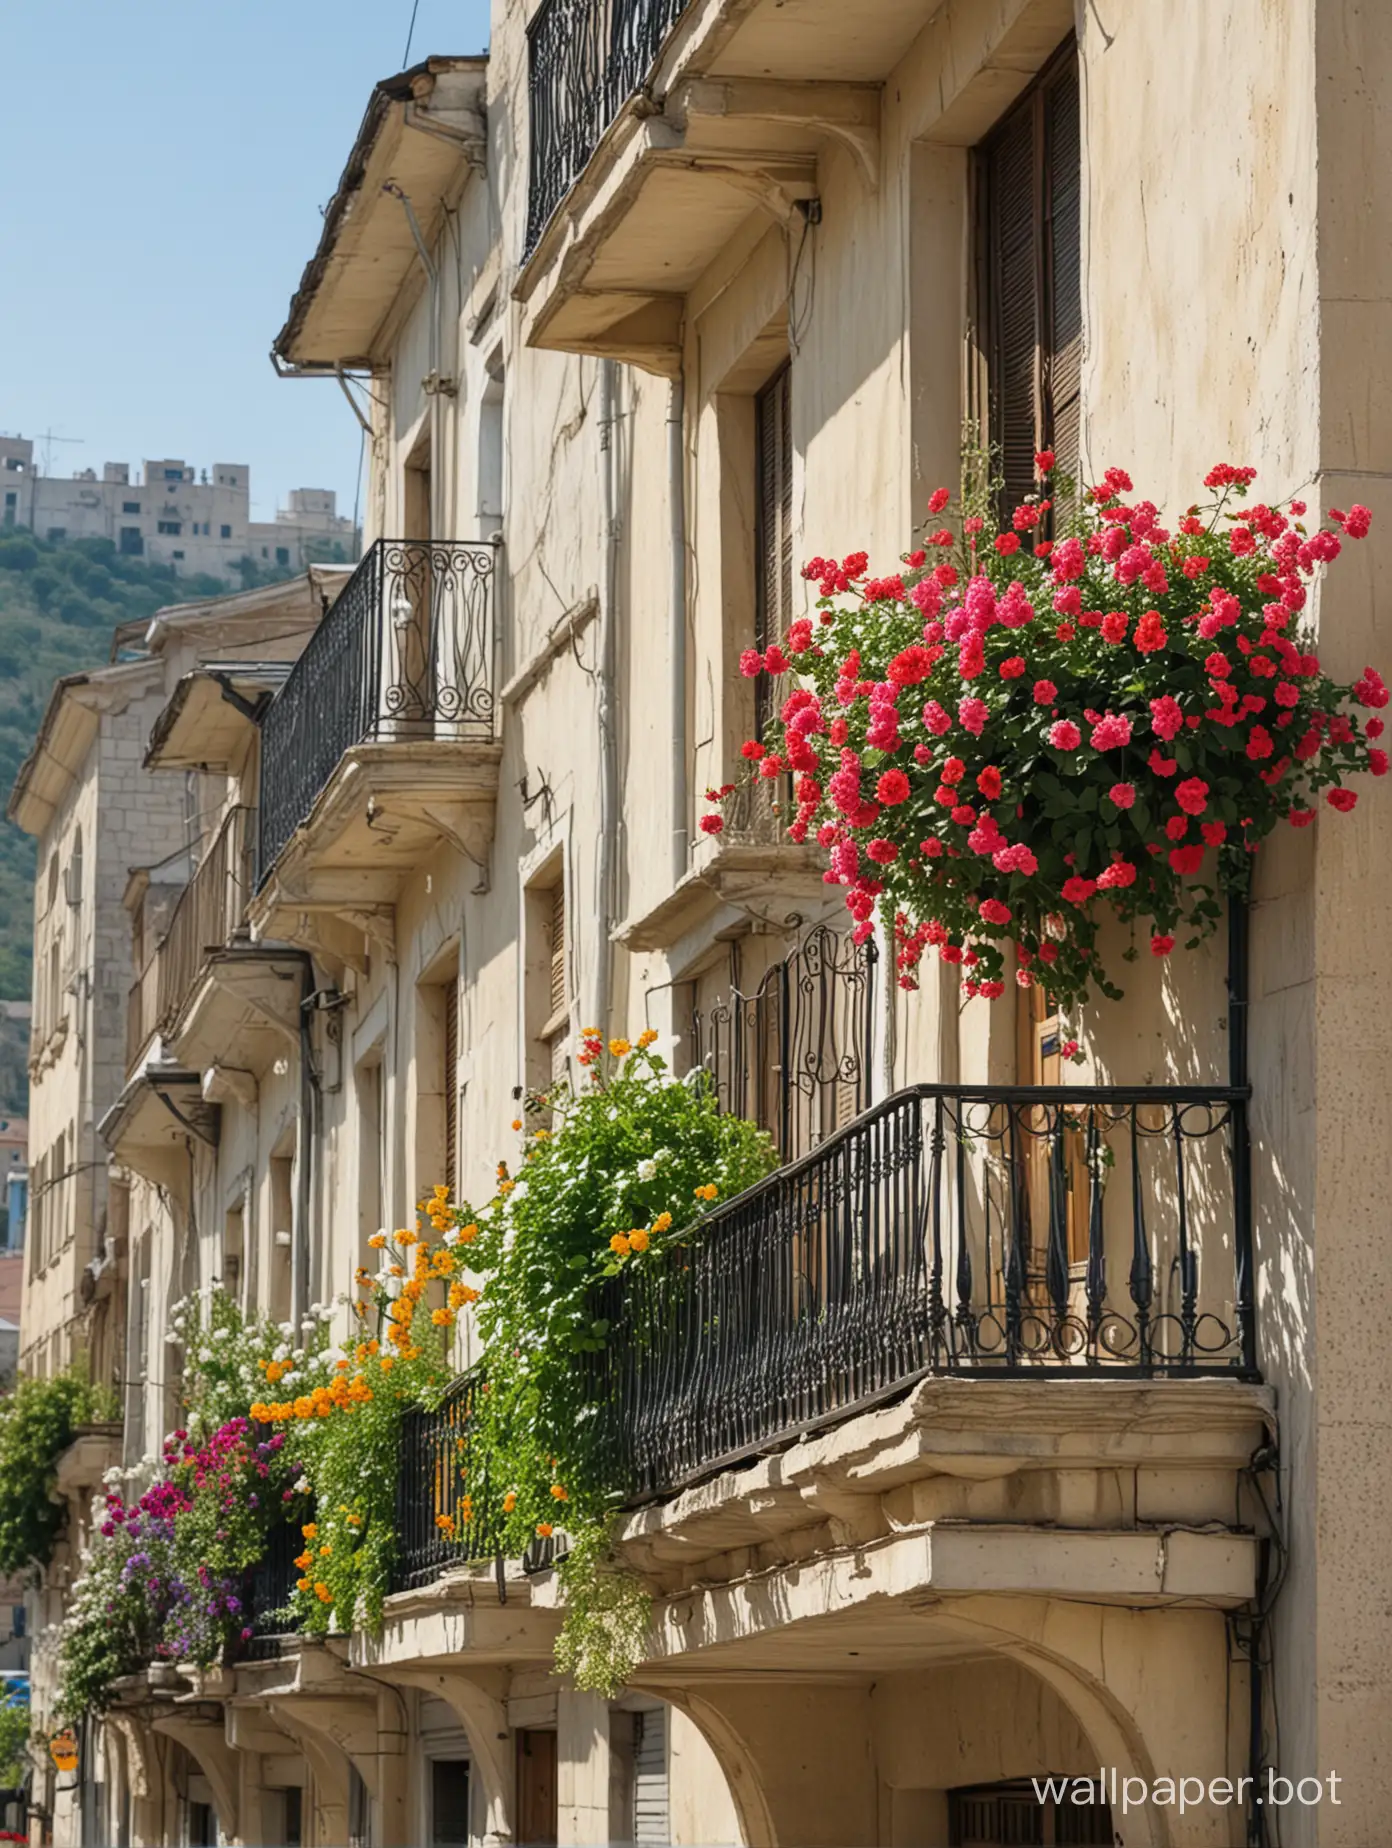 Crimea, old city, street, flowers on balconies